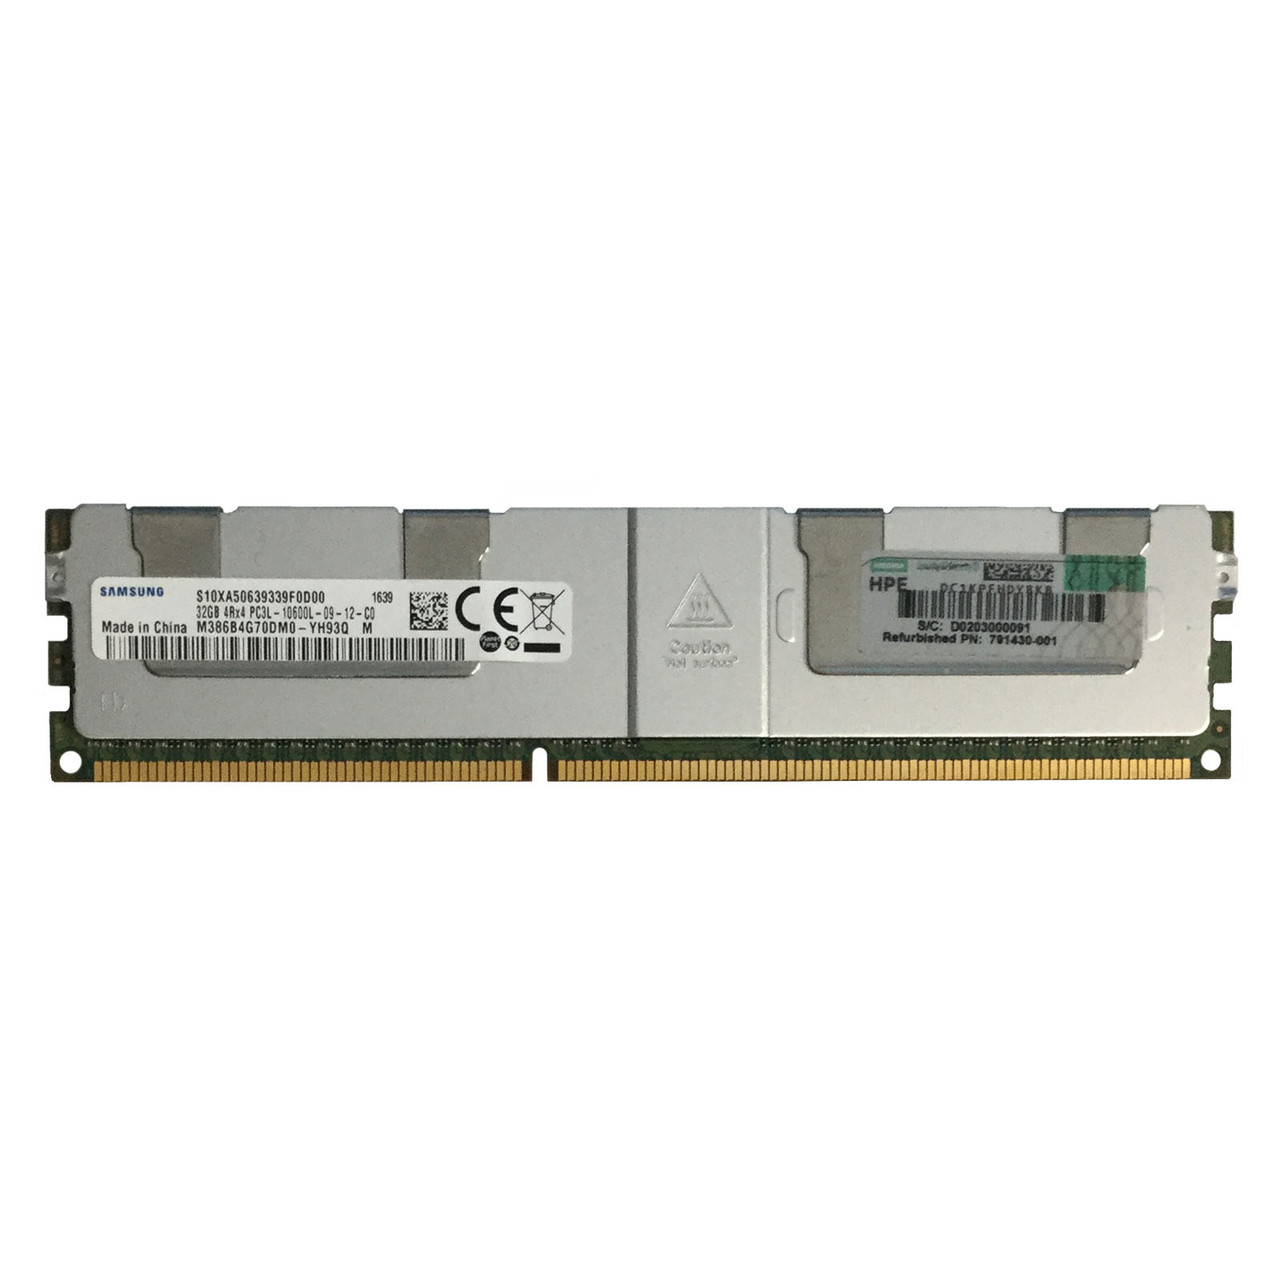 HP 791430-001 32GB PC3L-10600L LRDIMM Memory Module 